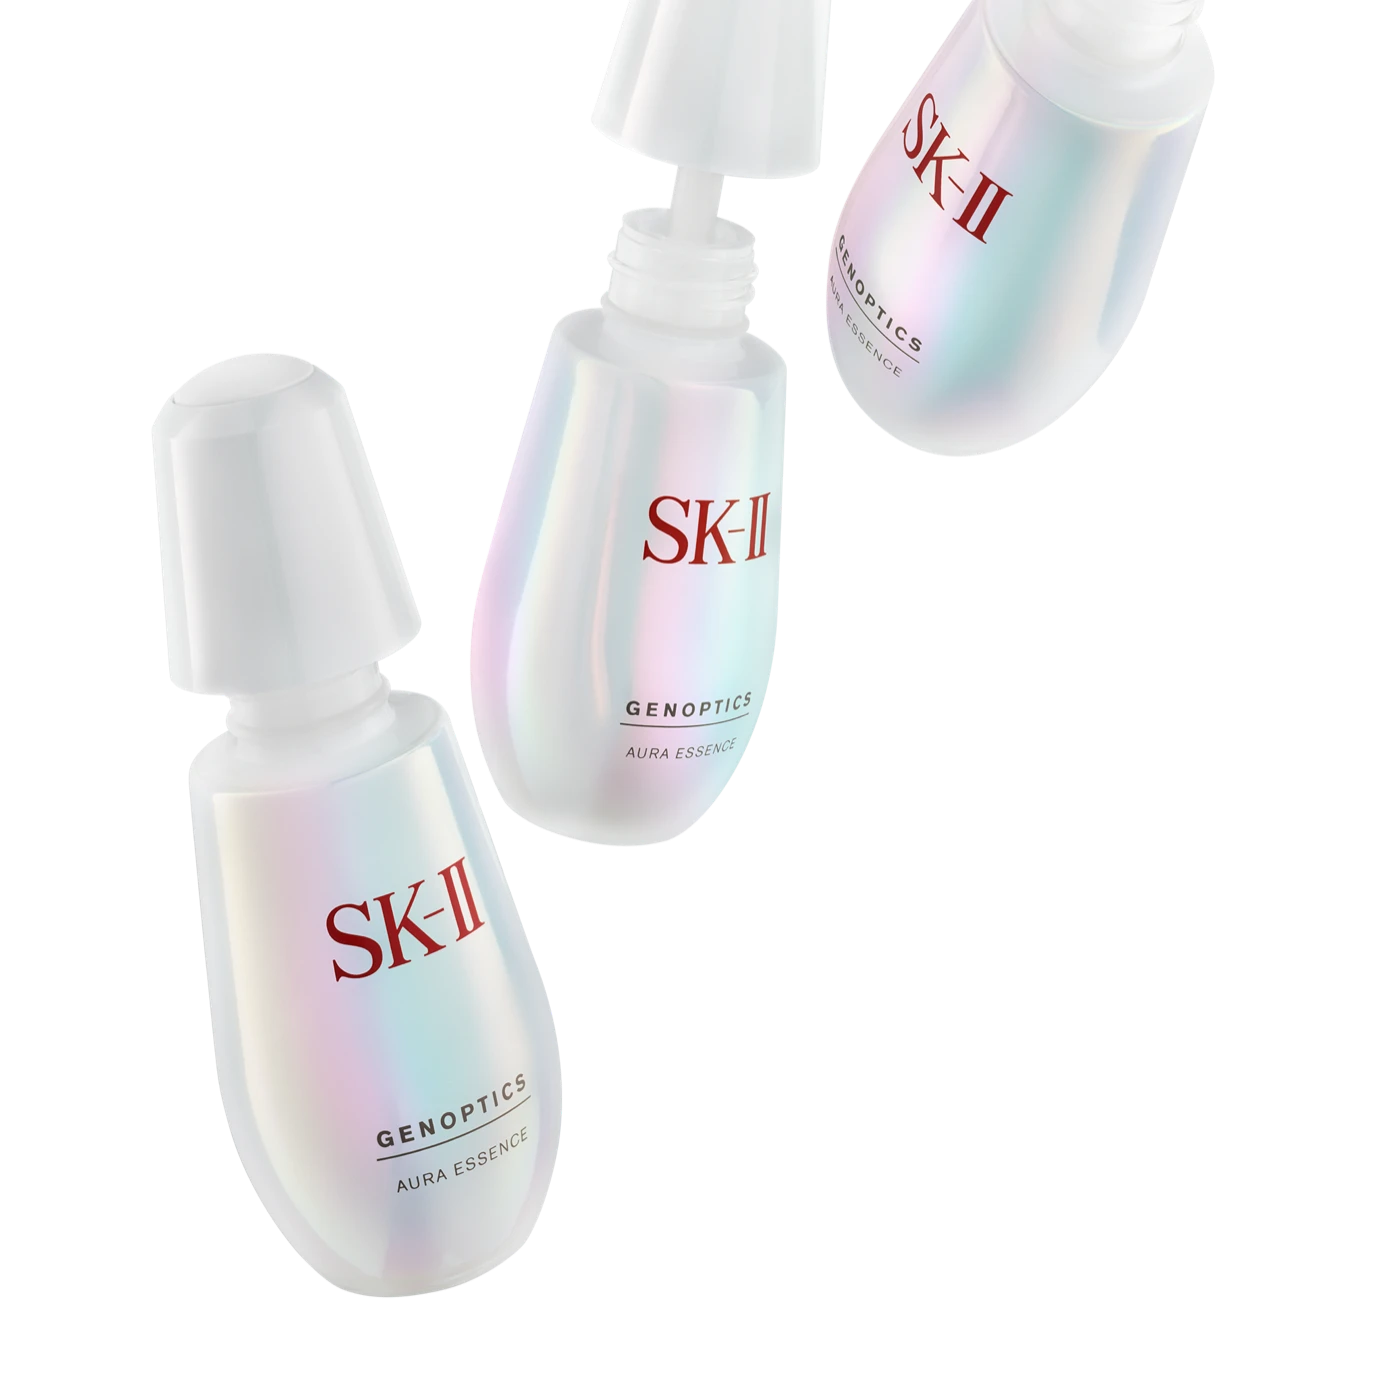 SK-II Genoptics Aura Essence for skin brightening